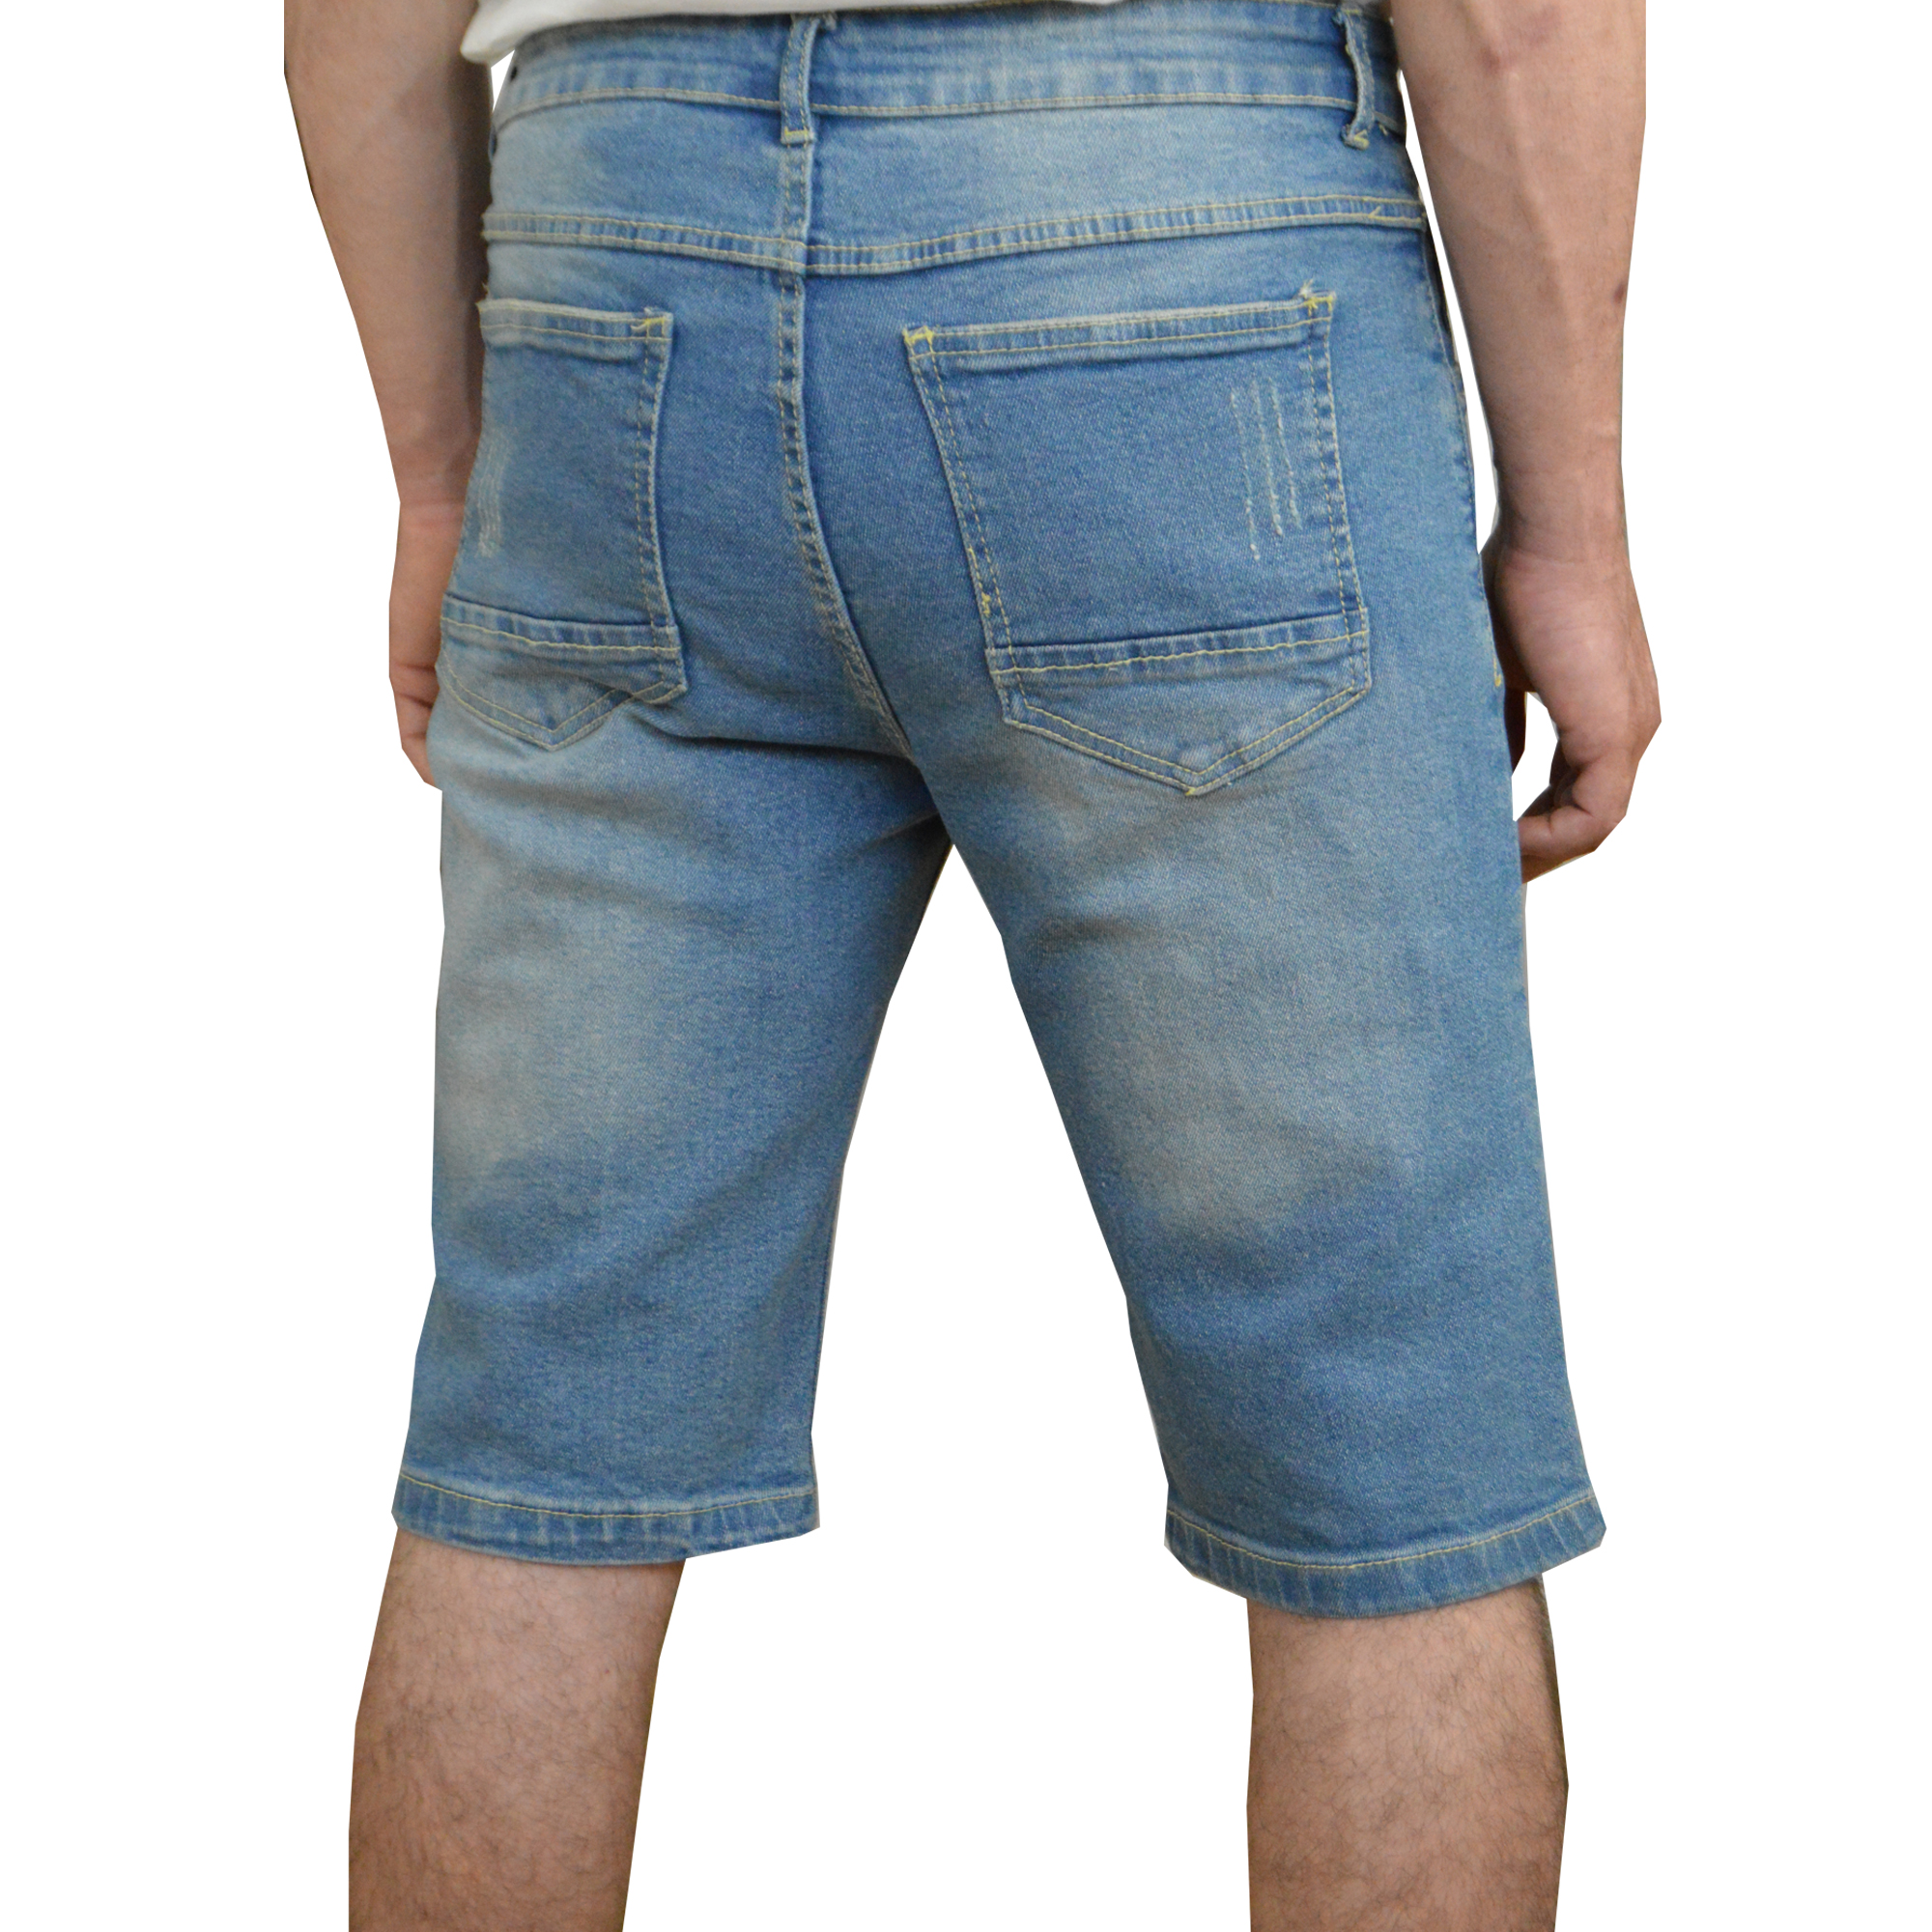 SKYLINEWEARS Men Ripped Distressed Shorts Slim Fit Denim Jeans Shorts ...